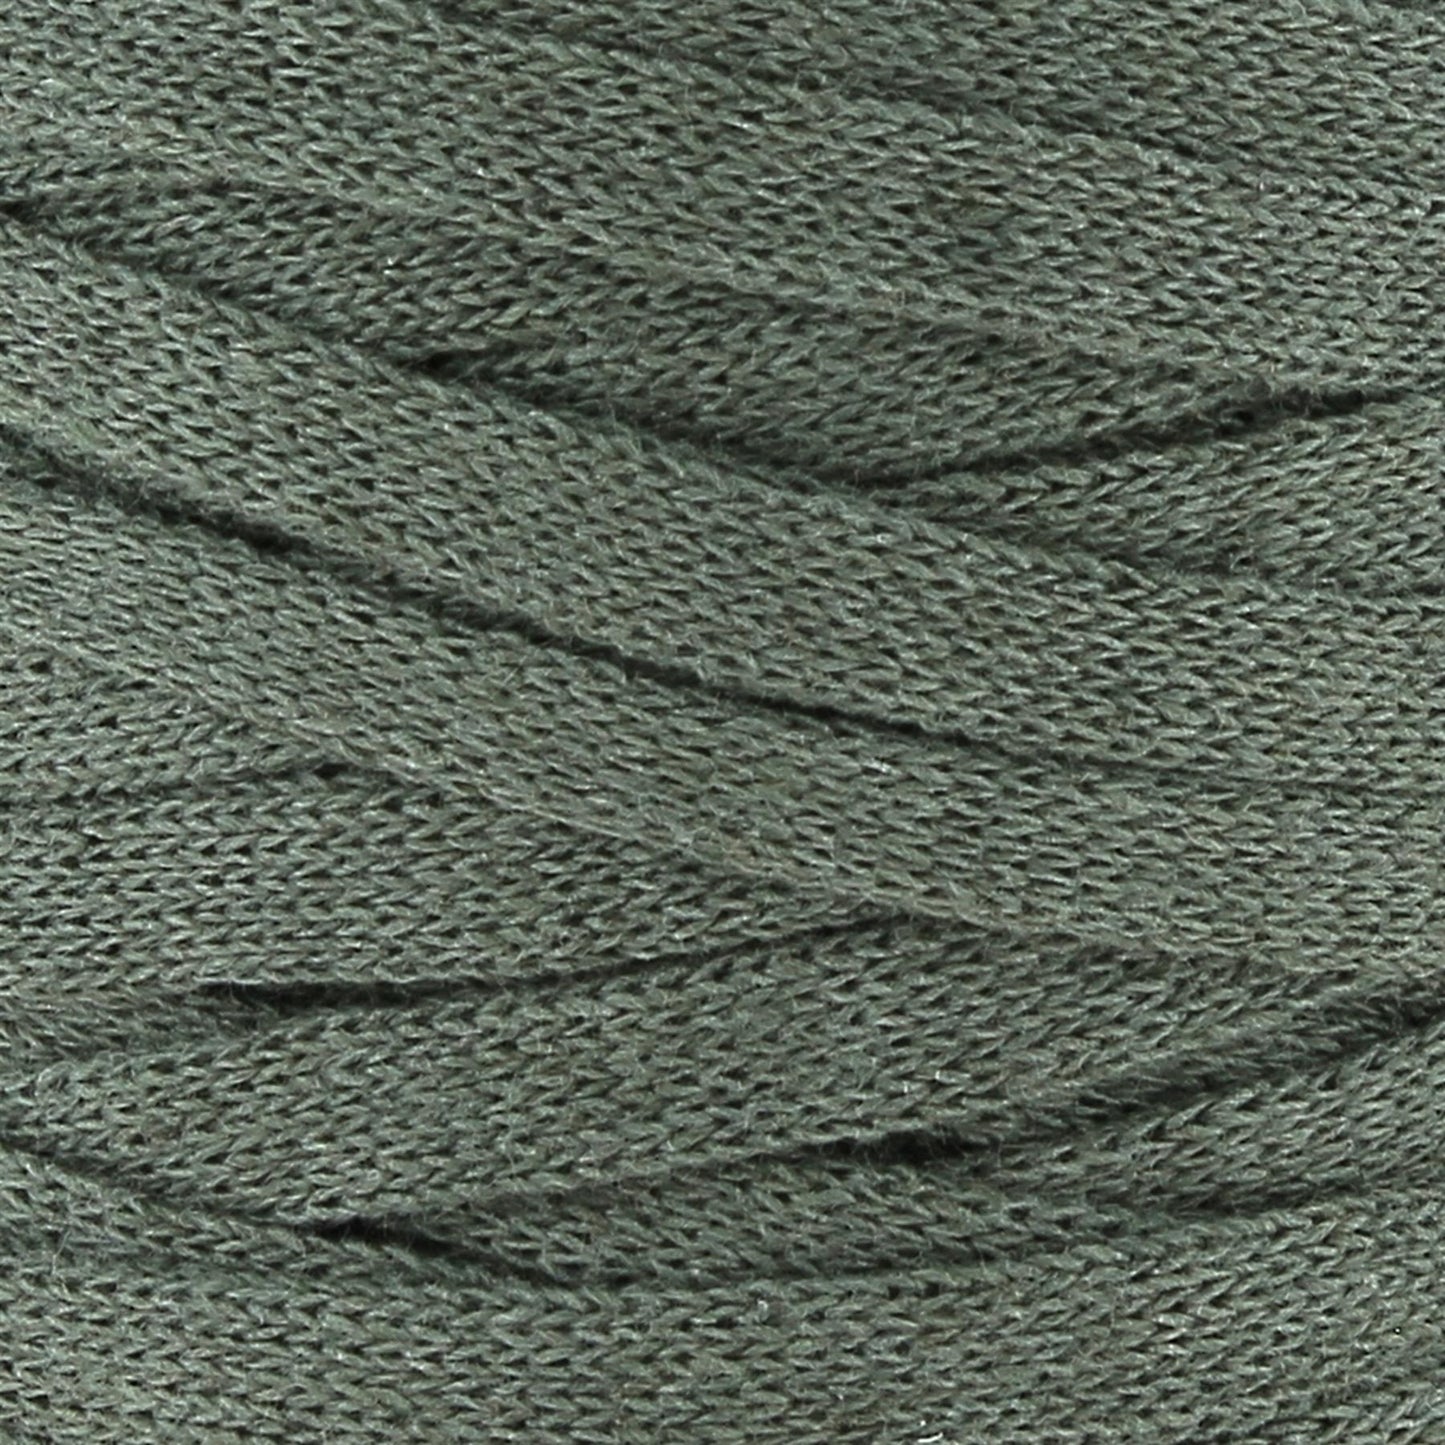 [Hoooked] RXLSP6MINI RibbonXL Dried Herb Cotton Yarn - 60M, 125g